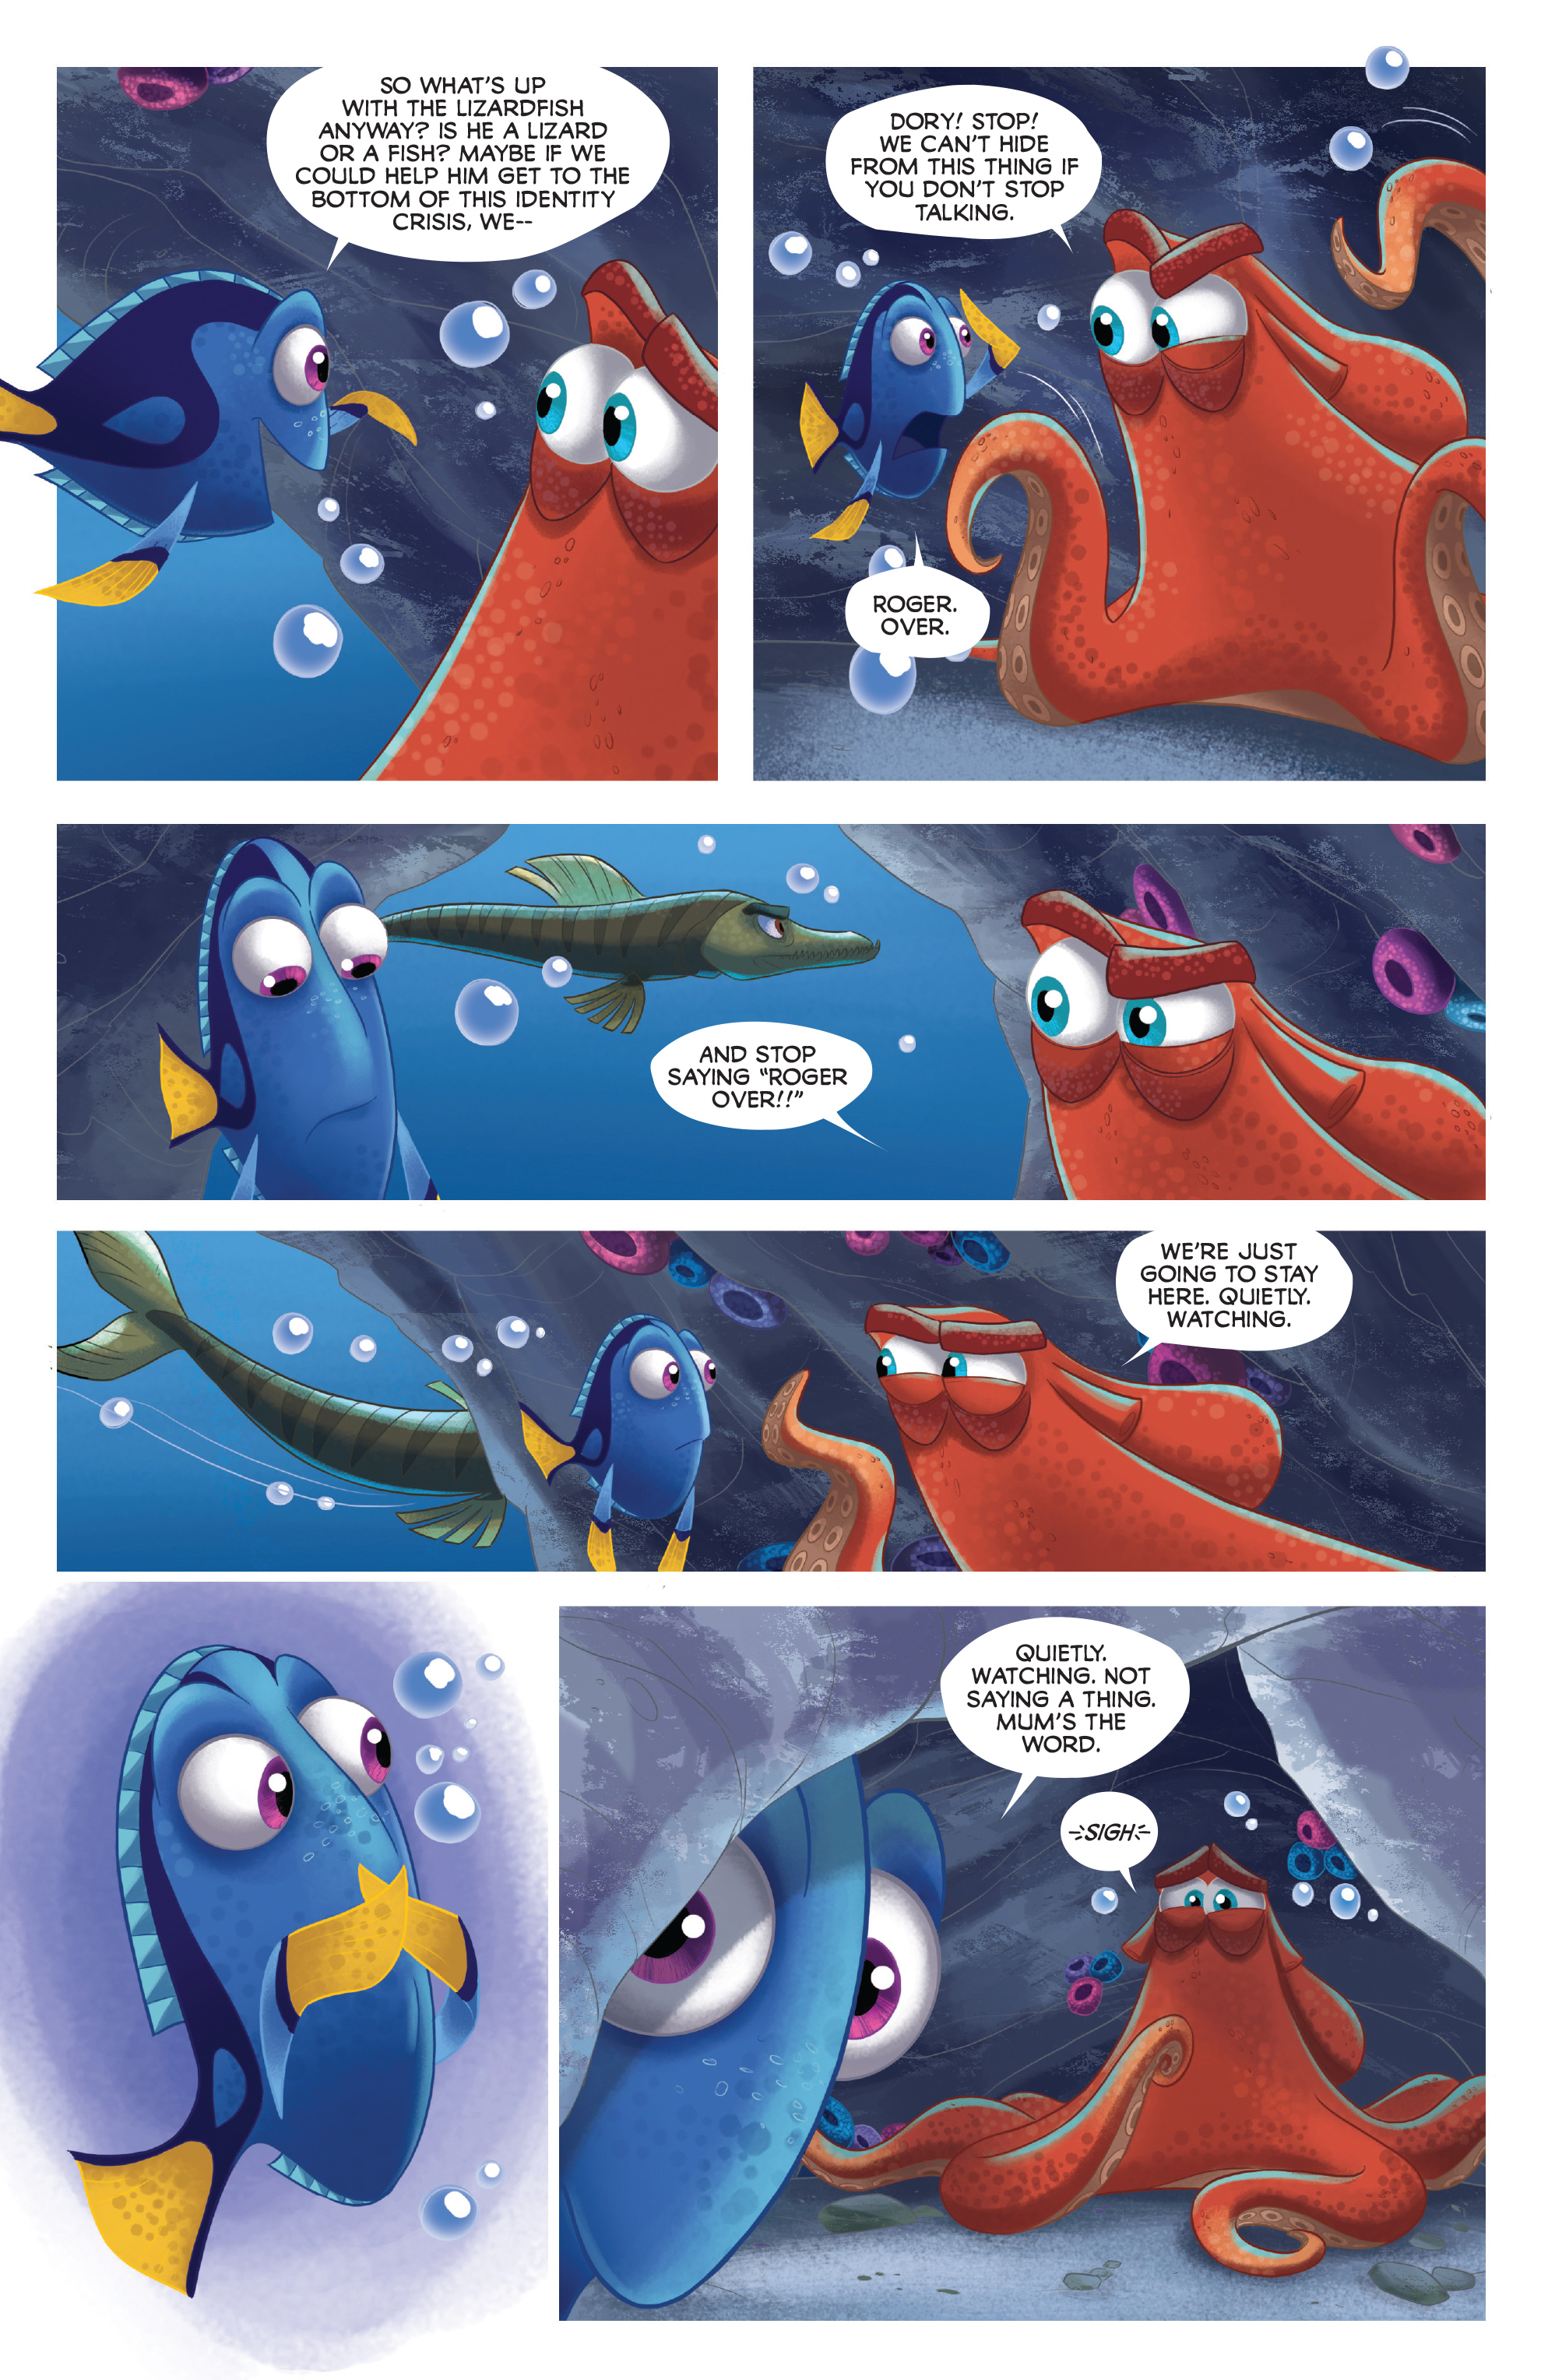 Finding Nemo Porn Comic - Disney Pixar Finding Dory Issue 1 | Read Disney Pixar Finding Dory Issue 1  comic online in high quality. Read Full Comic online for free - Read comics  online in high quality .